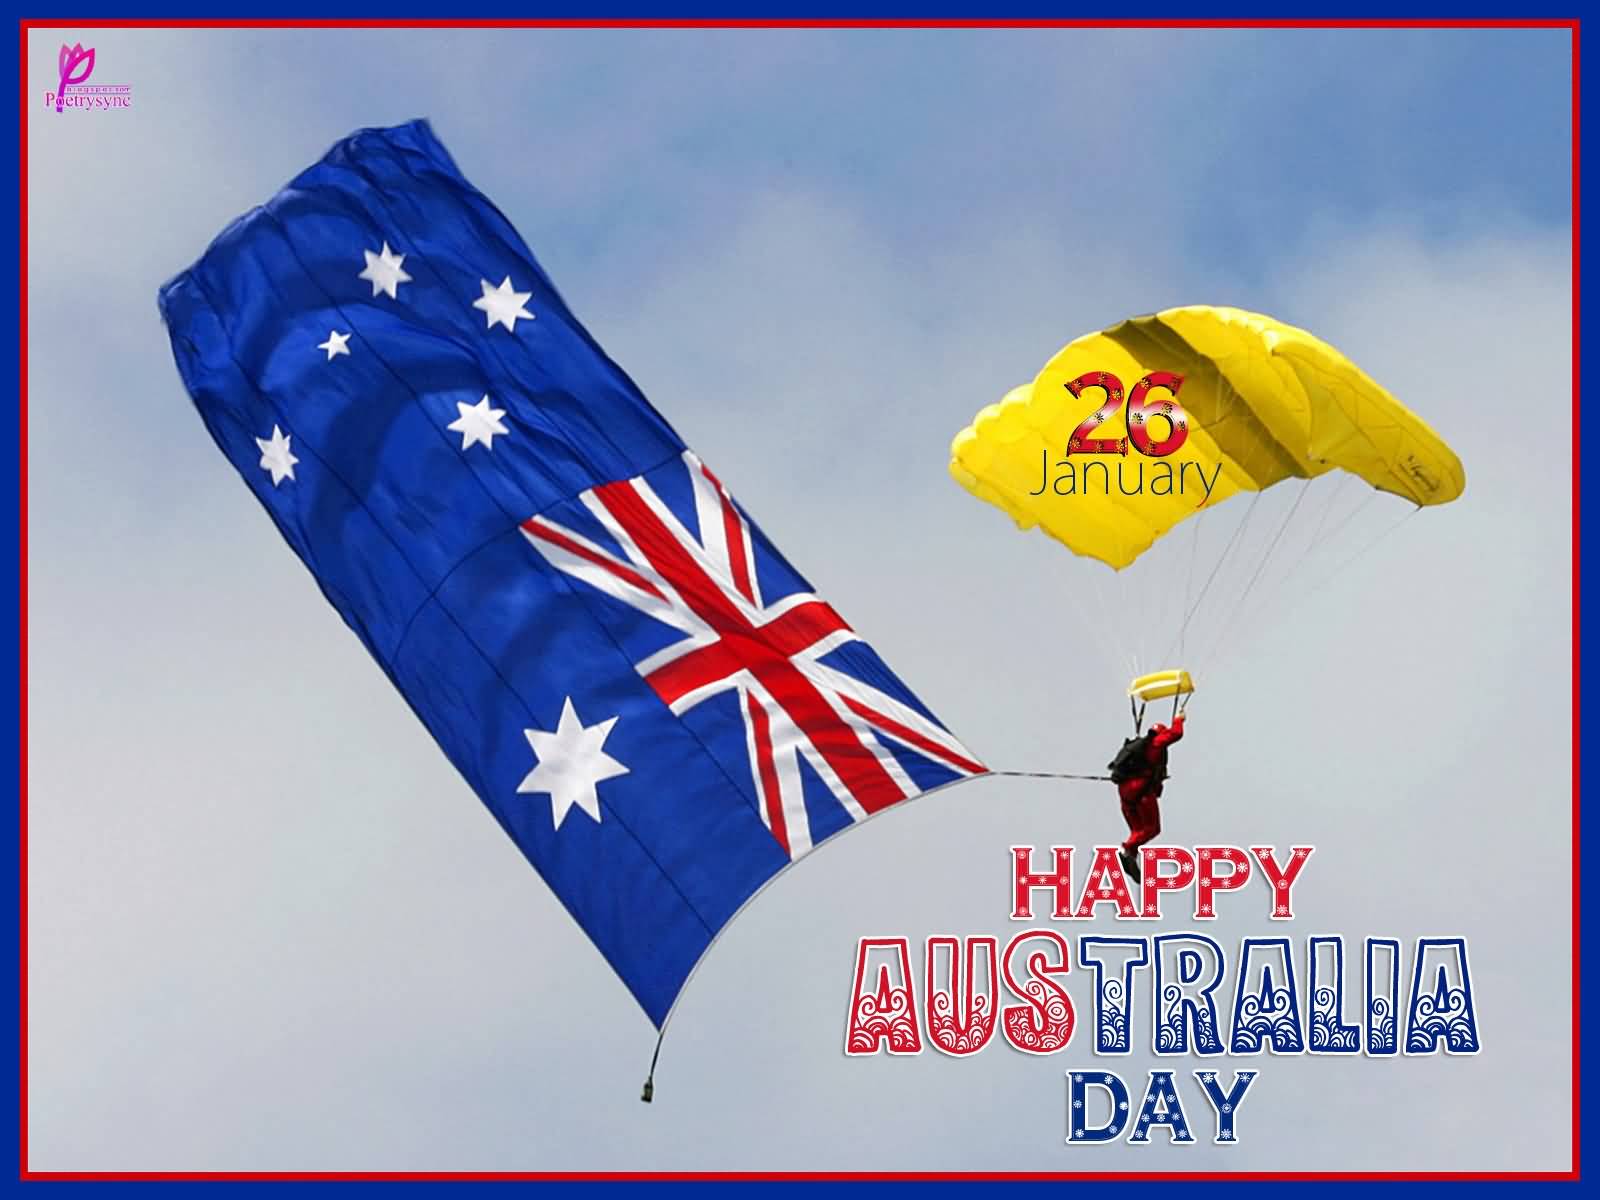 Happy Australia Day 26 January Man On Parachute With Australia Flag